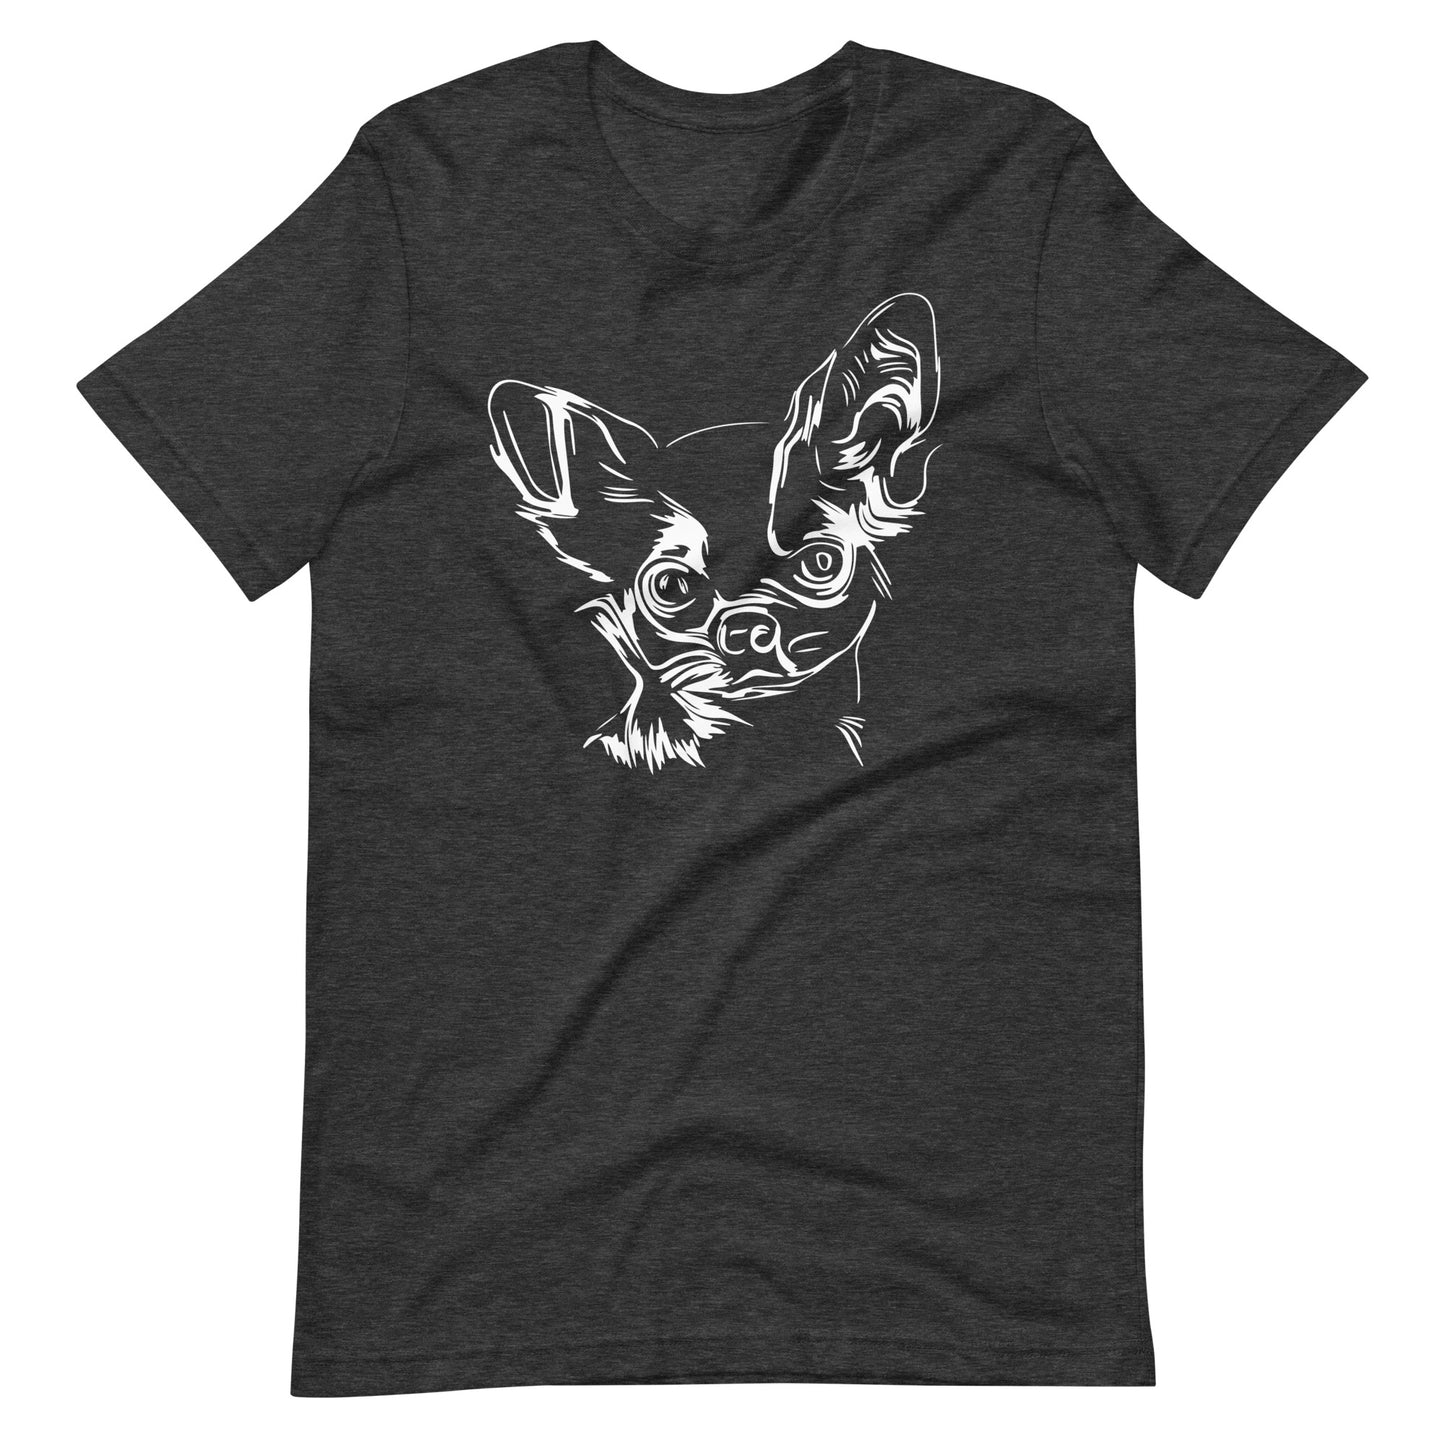 White line Chihuahua face on unisex dark grey heather t-shirt